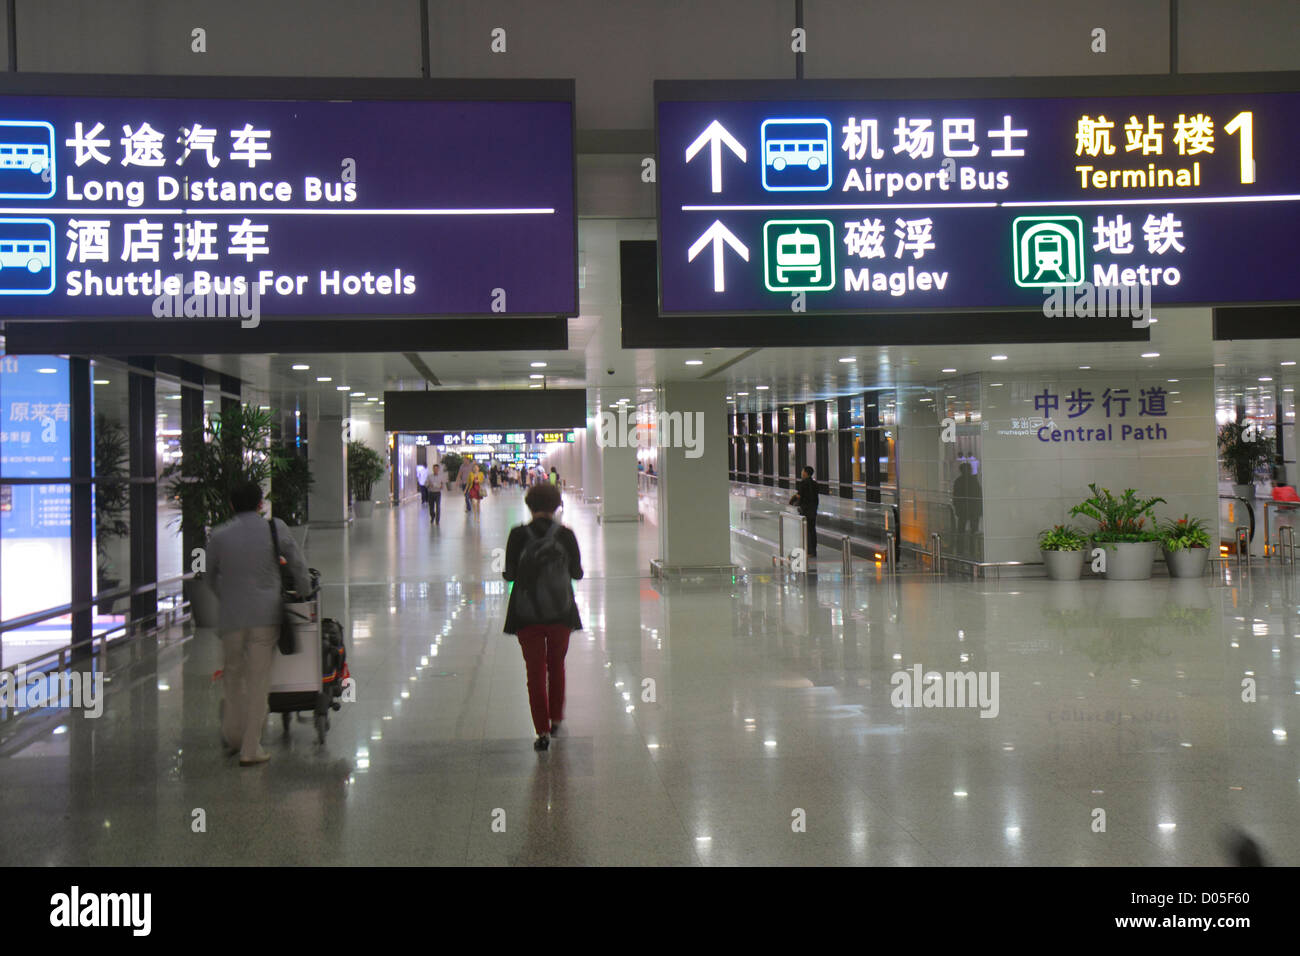 Shanghai Cina, aeroporto internazionale di Pudong cinese, PVG, gate, terminal, cinese Mandarin simboli, hanzi, han, caratteri, segno, informazioni, indicazioni, bus, co Foto Stock